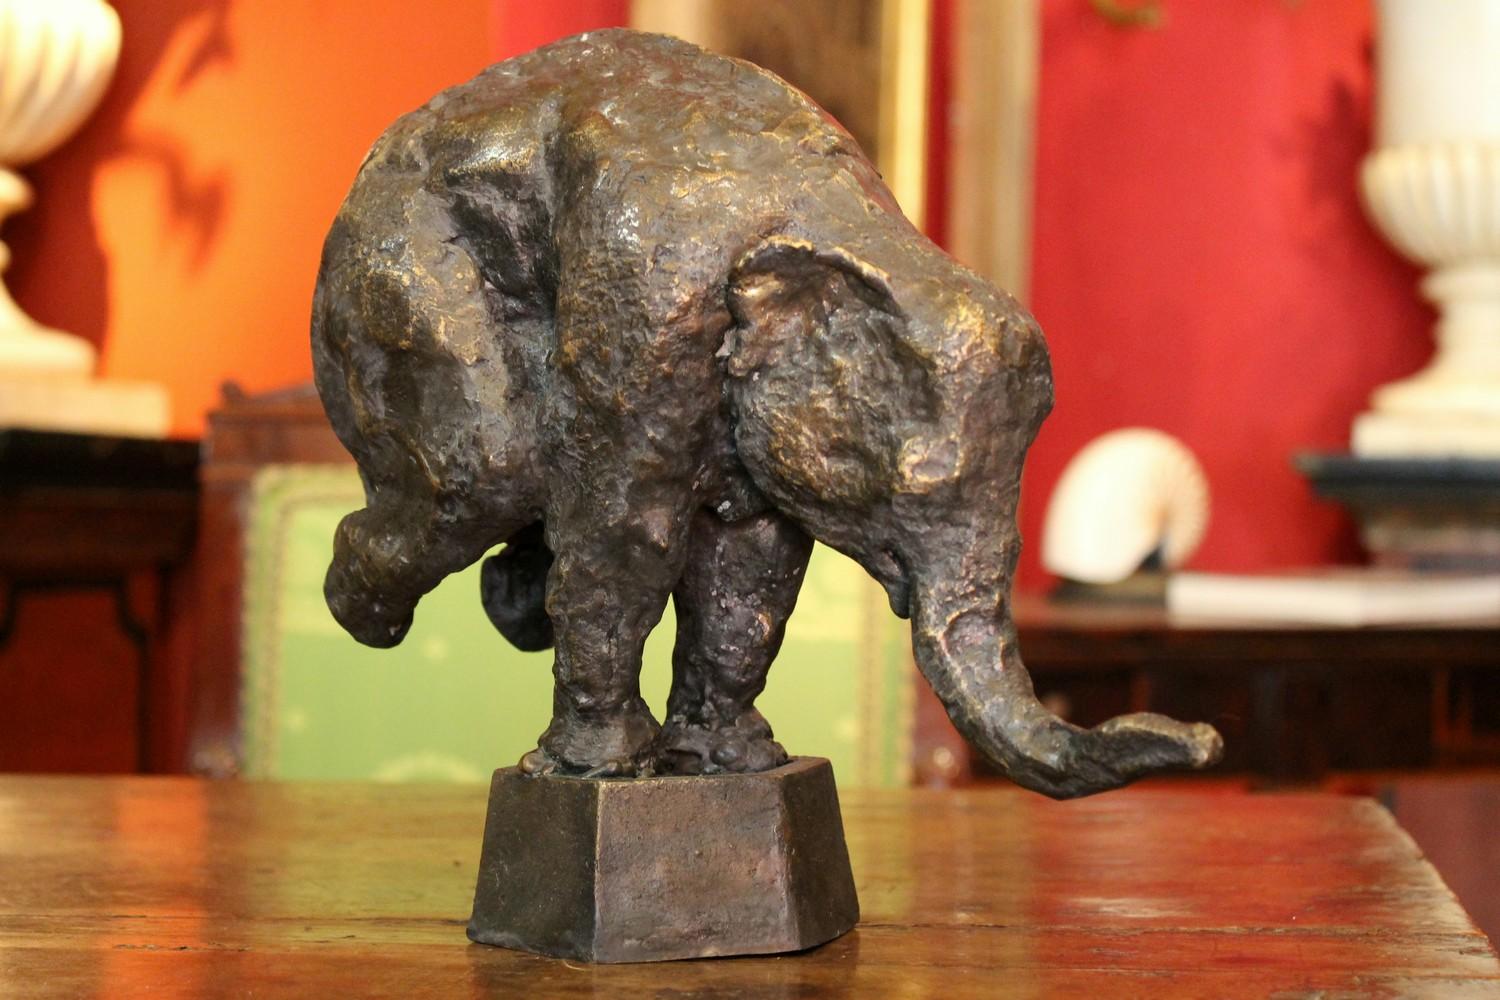 Elephant on Iron Pedestal, Lost Wax Casting Parcel-Gilt Patina Bronze Sculpture 14